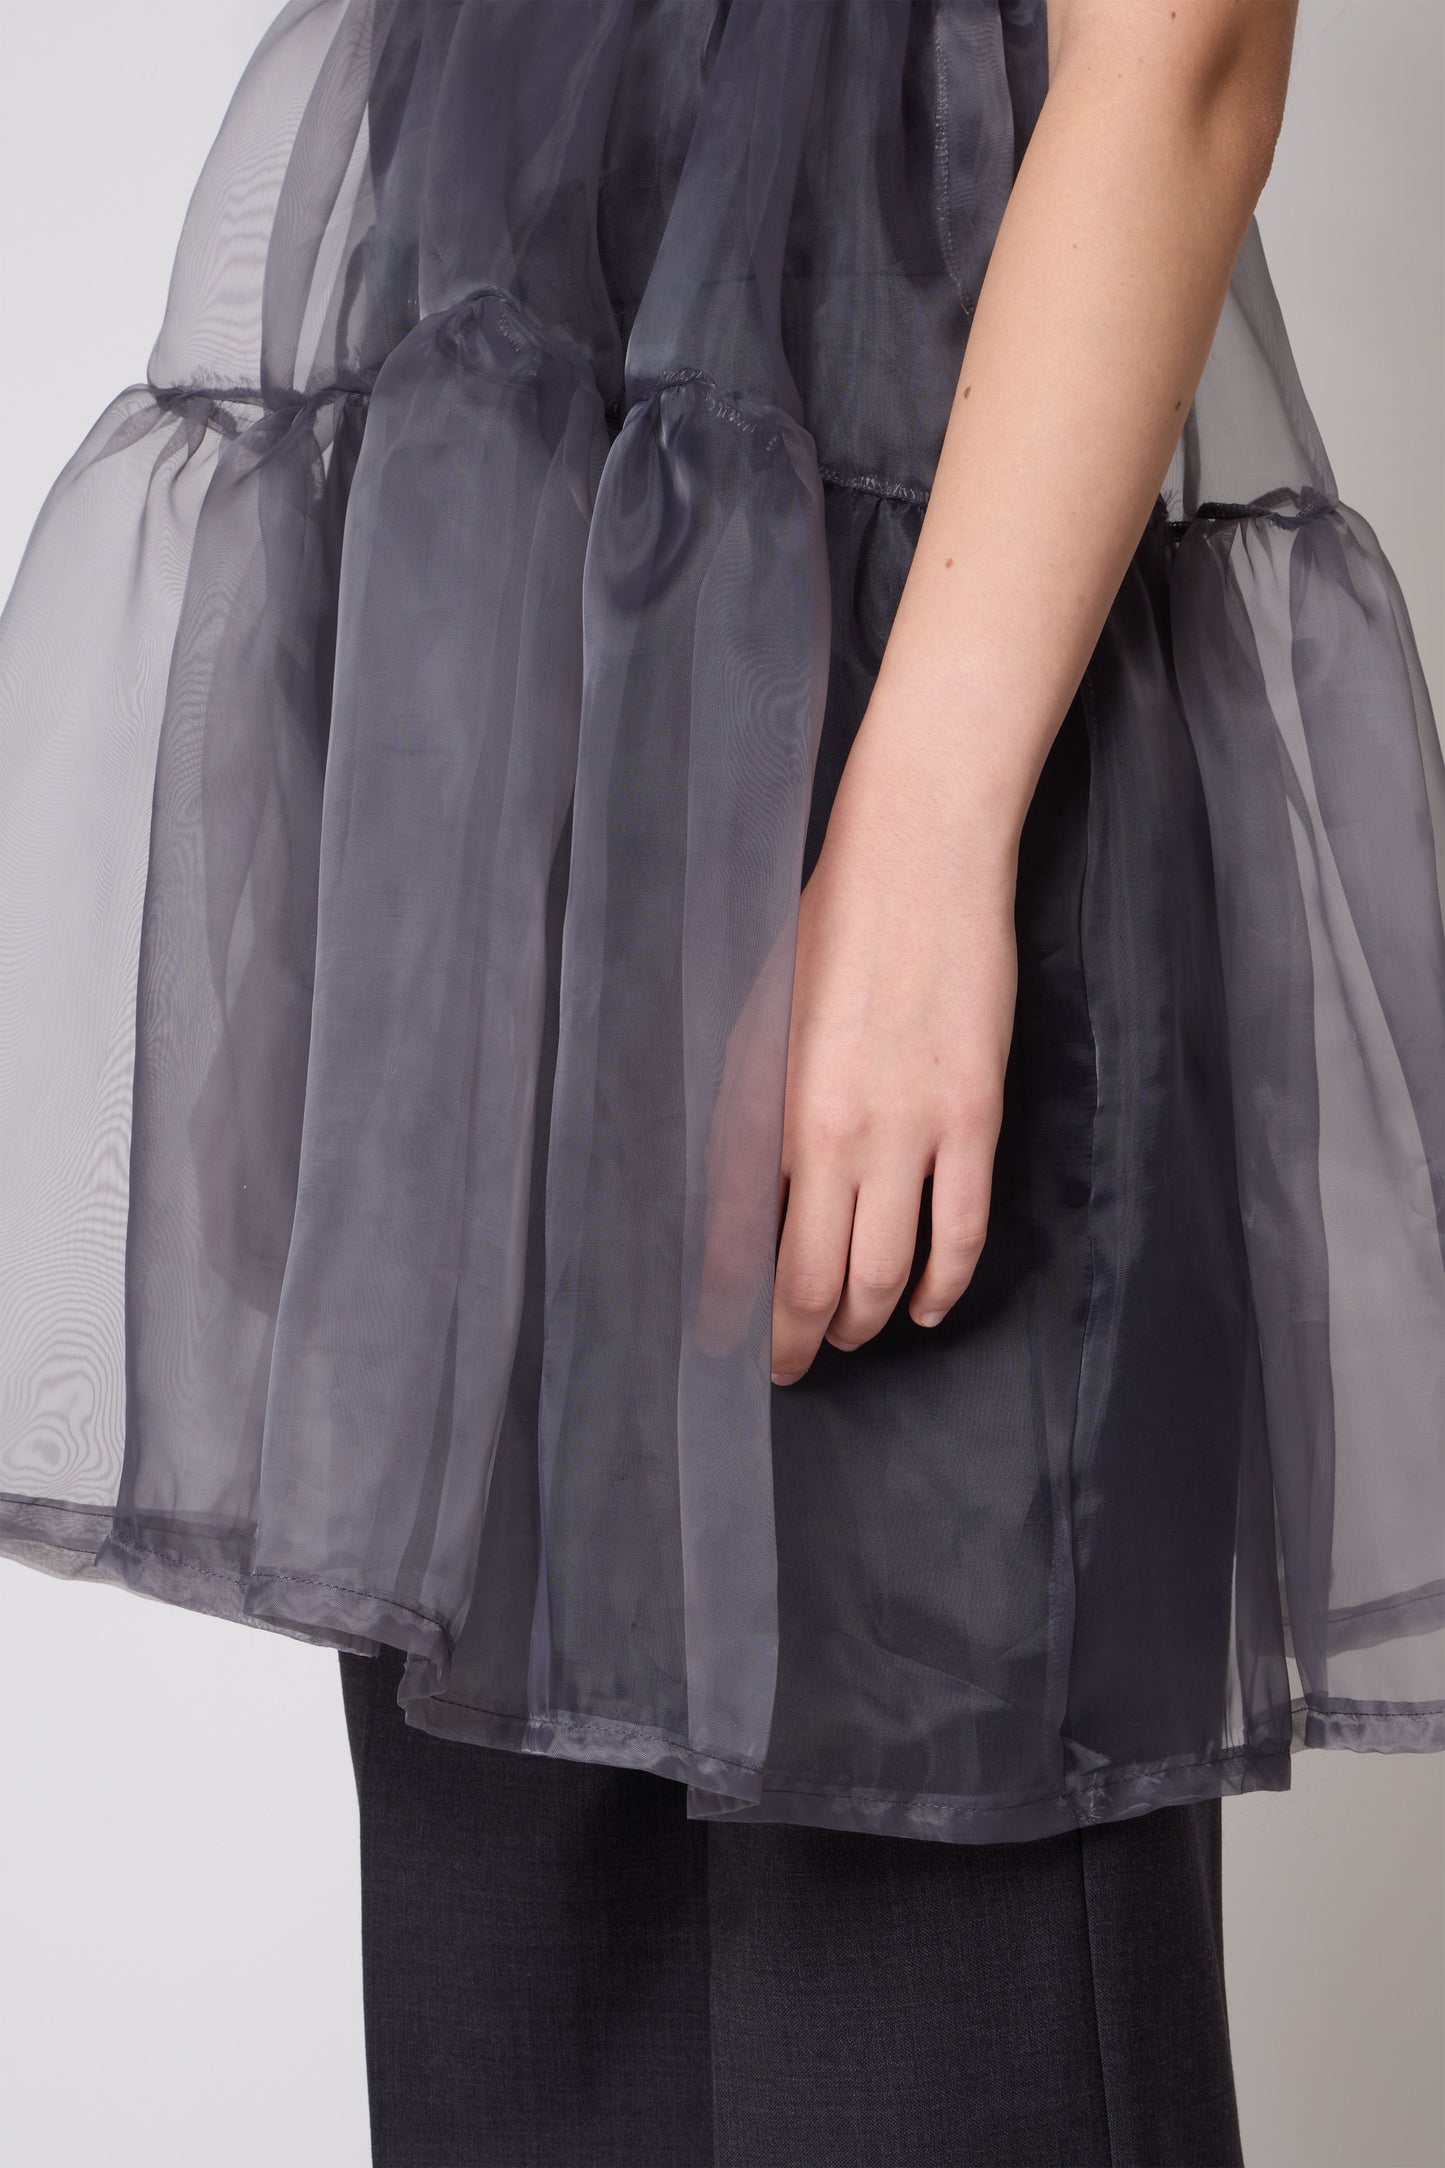 Eloise Dress in Organza Grey